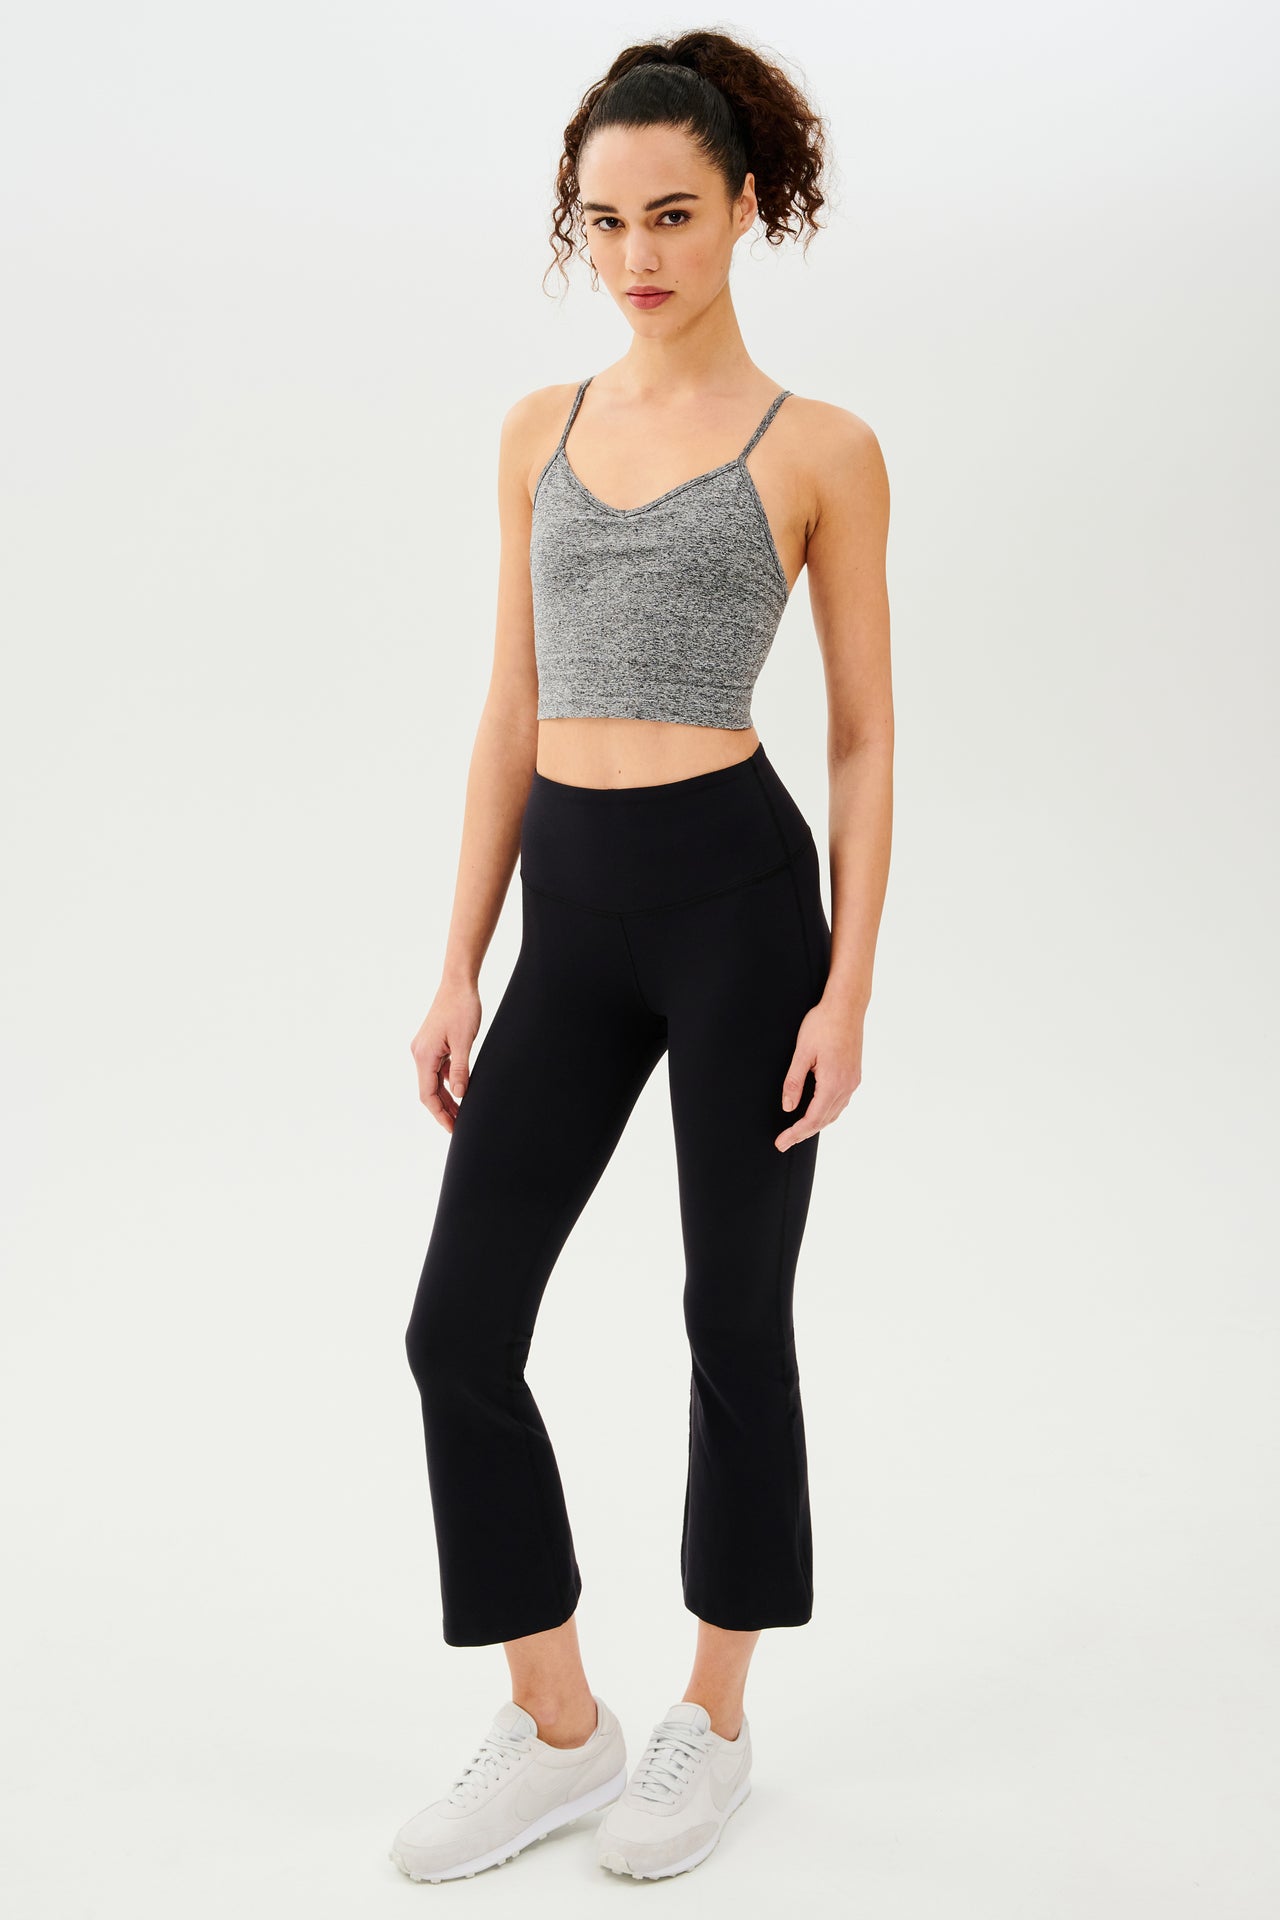 A woman wearing black leggings and a Splits59 Loren Seamless Cami - Heather Grey with a built-in shelf bra.